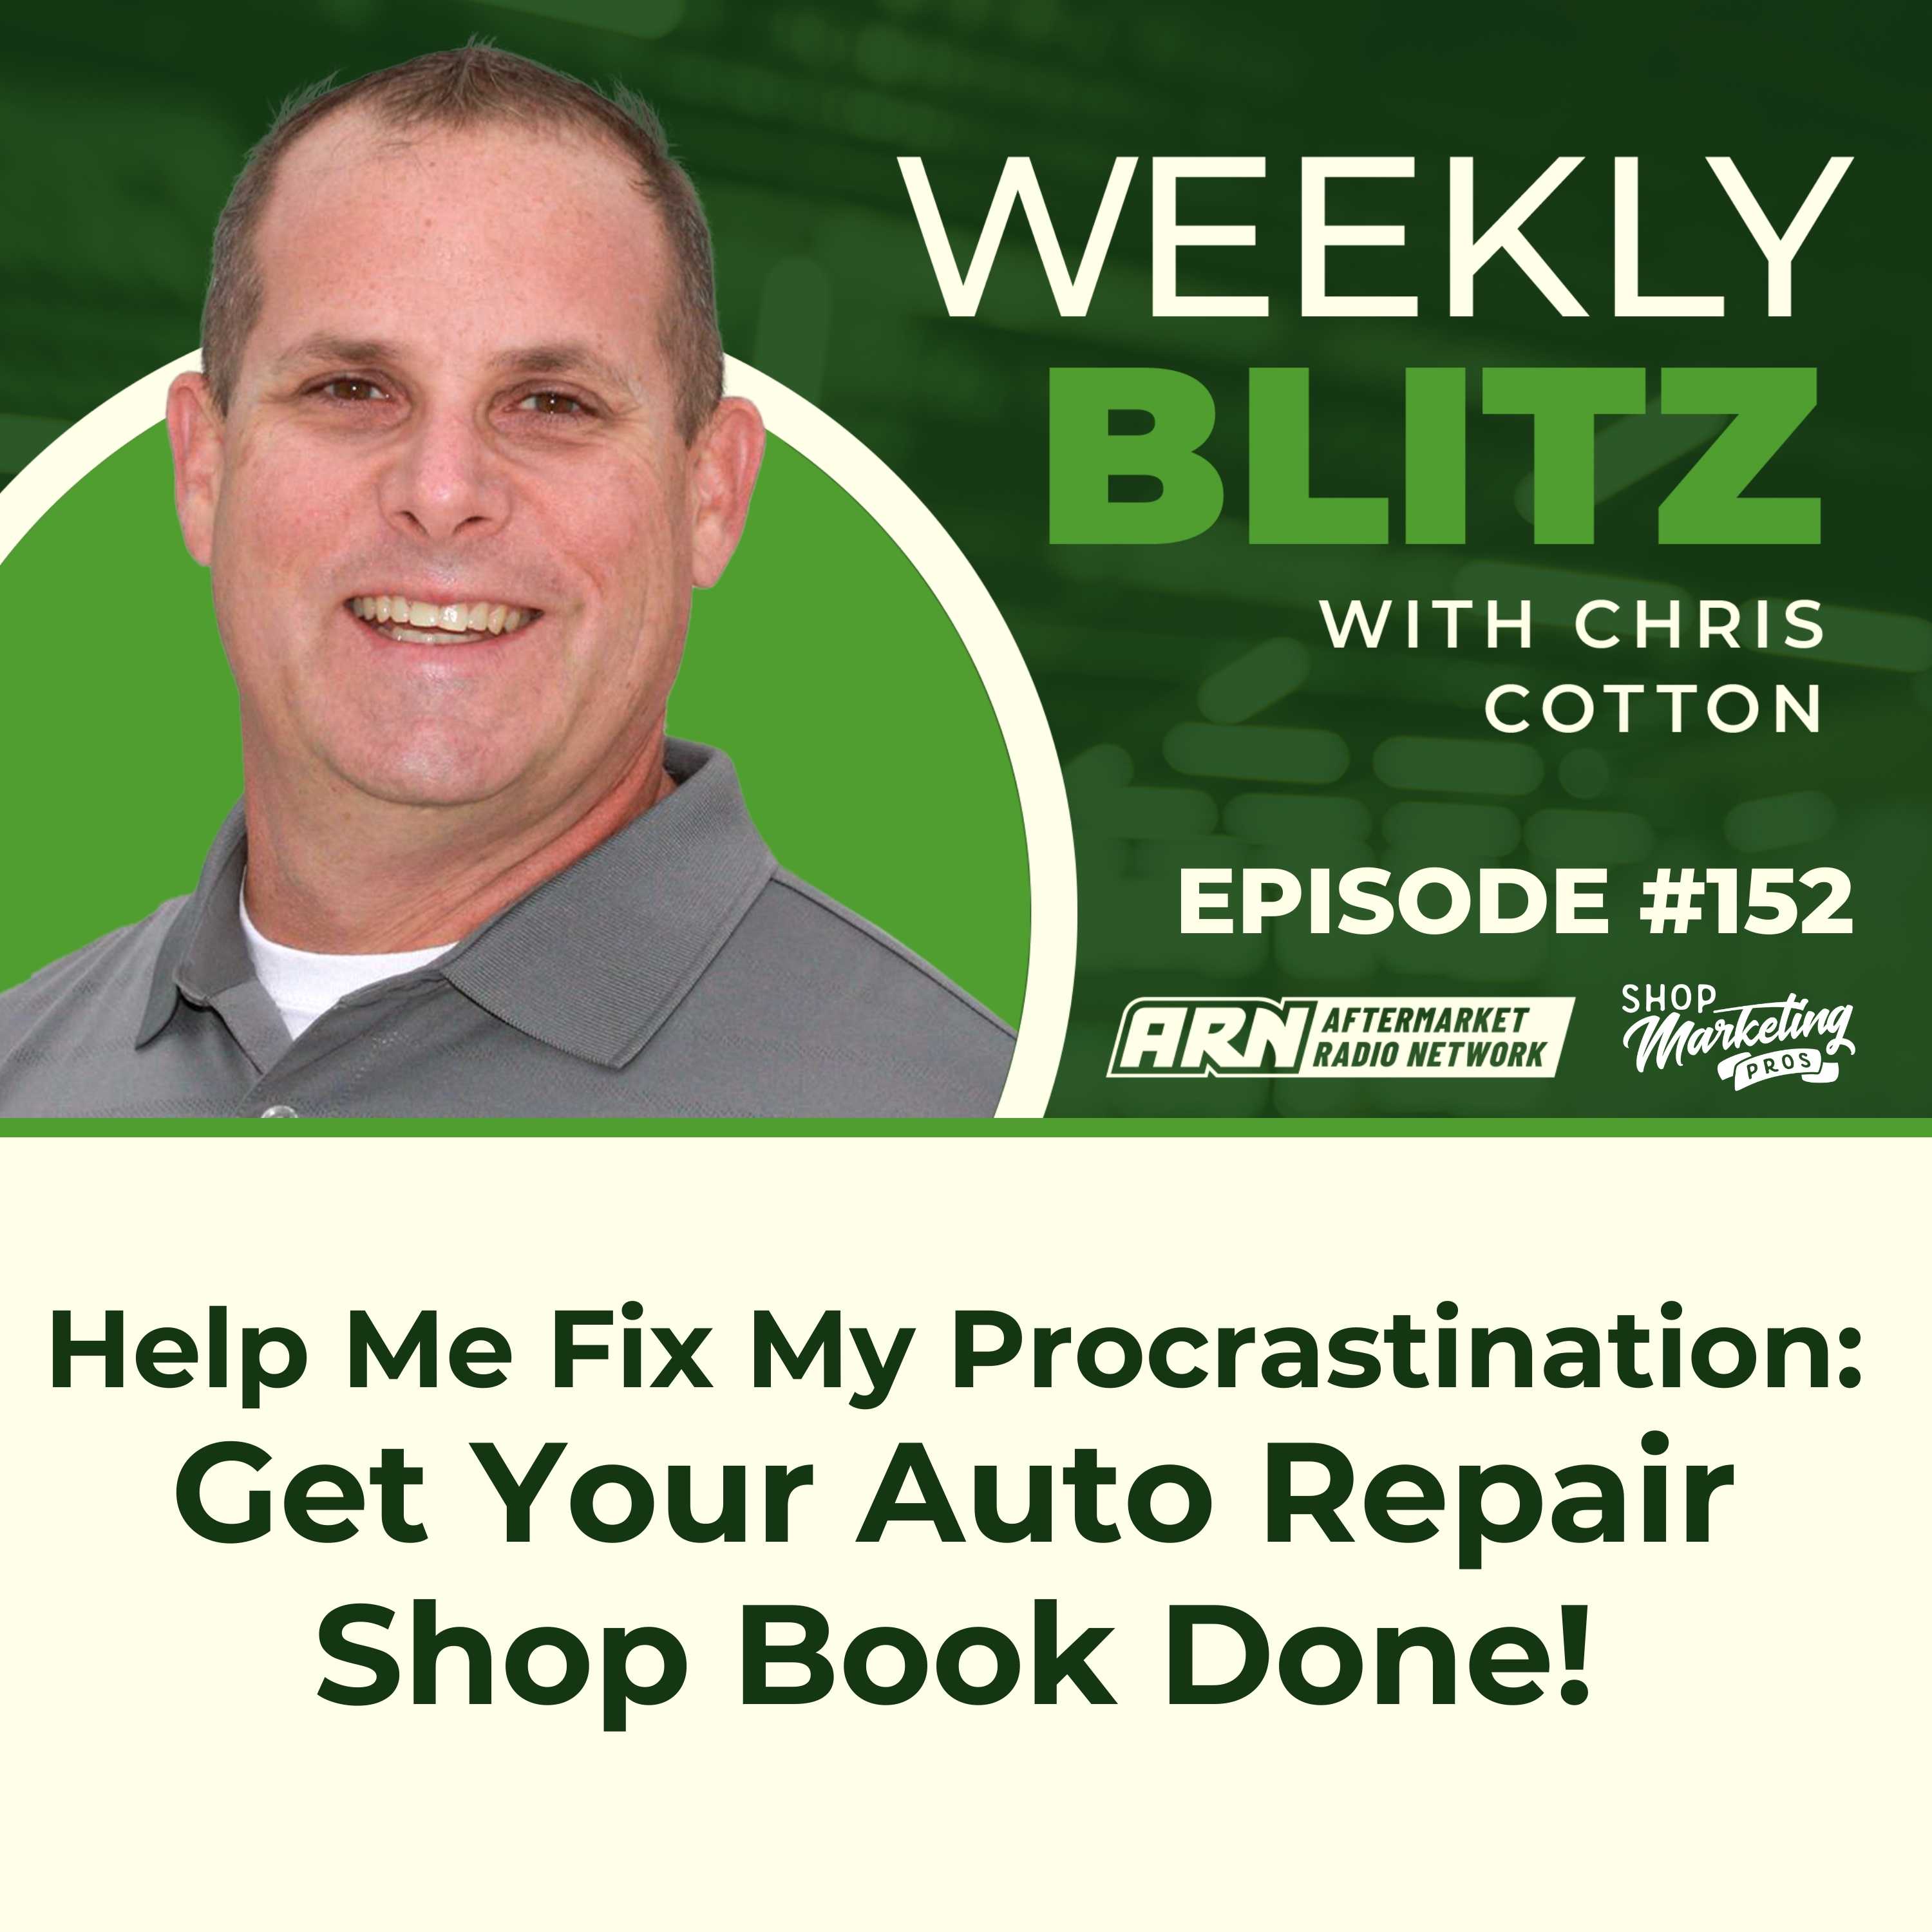 Help Me Fix My Procrastination: Get Your Auto Repair Shop Book Done![E152] - Chris Cotton Weekly Blitz